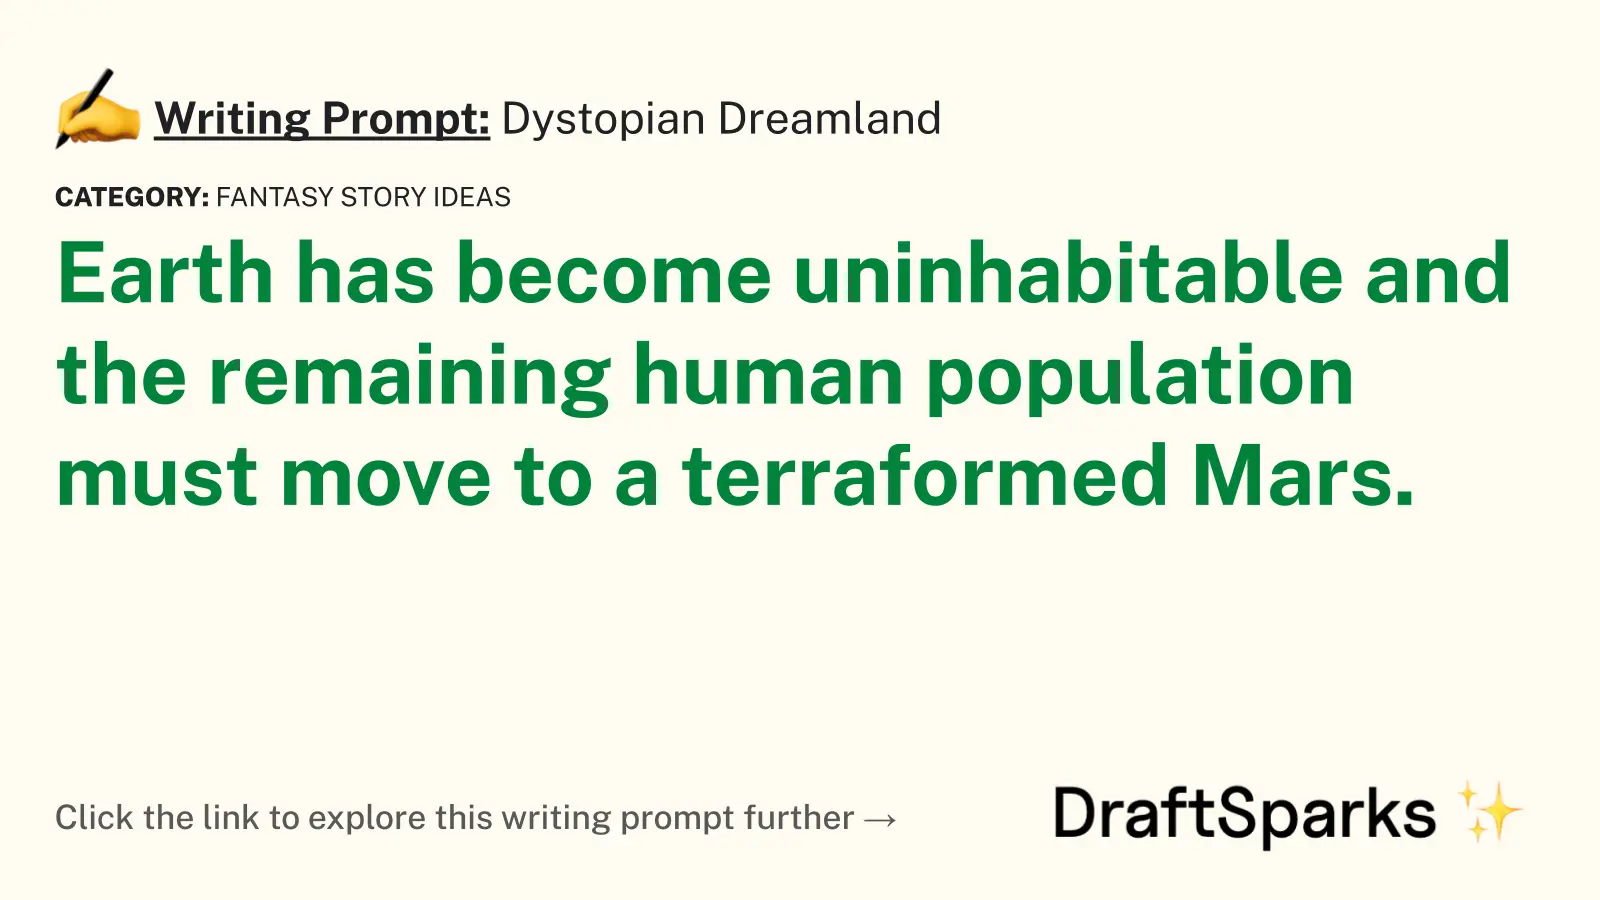 Dystopian Dreamland